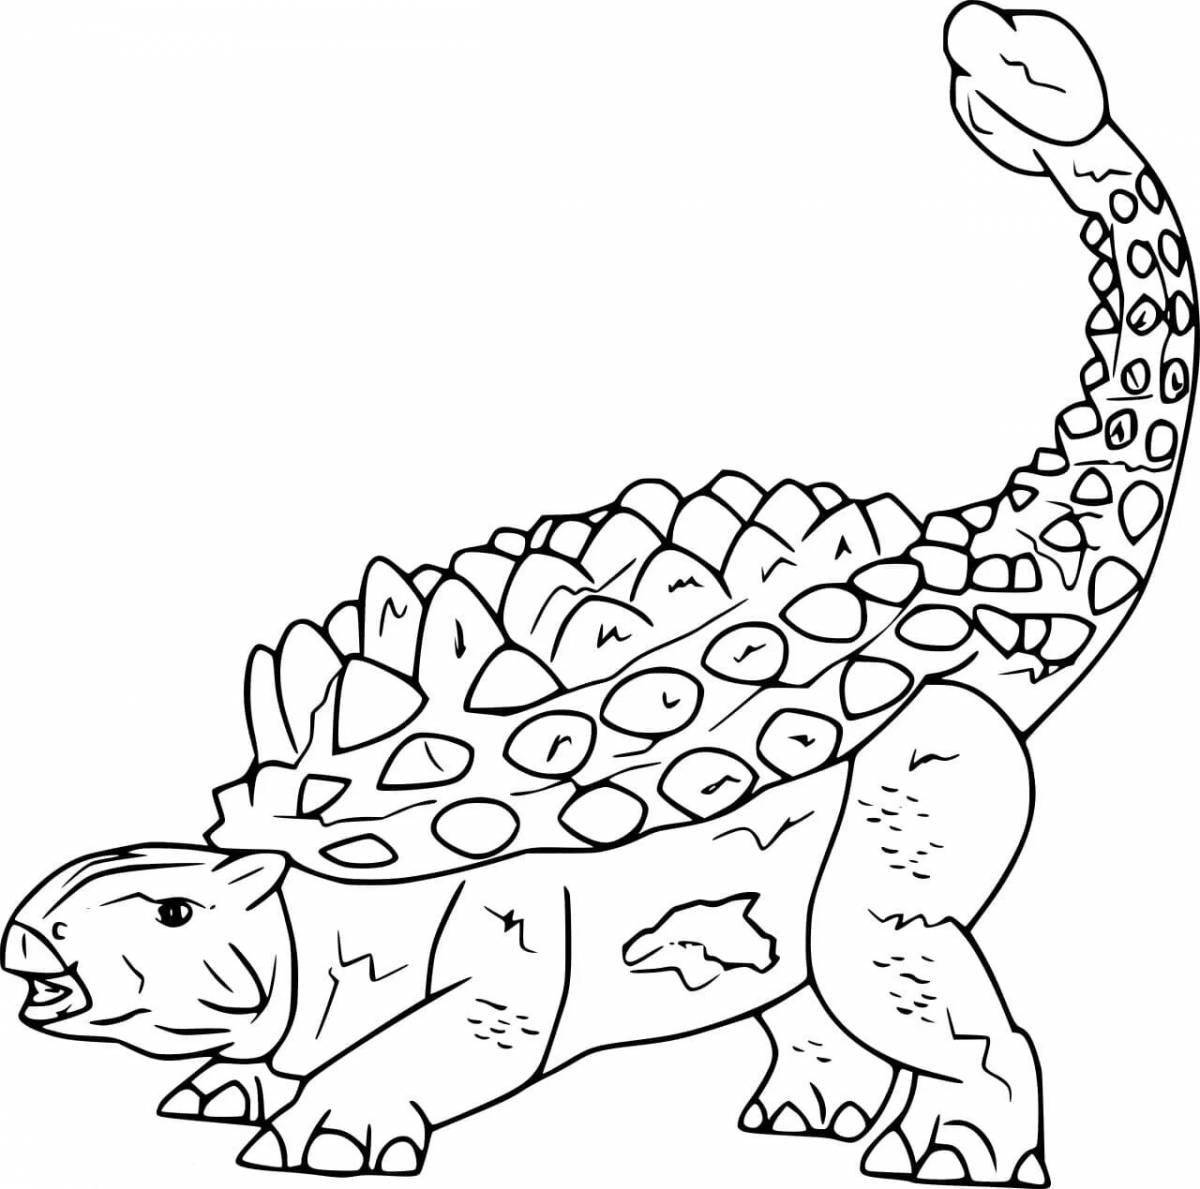 Ankylosaurus humorous coloring book for kids